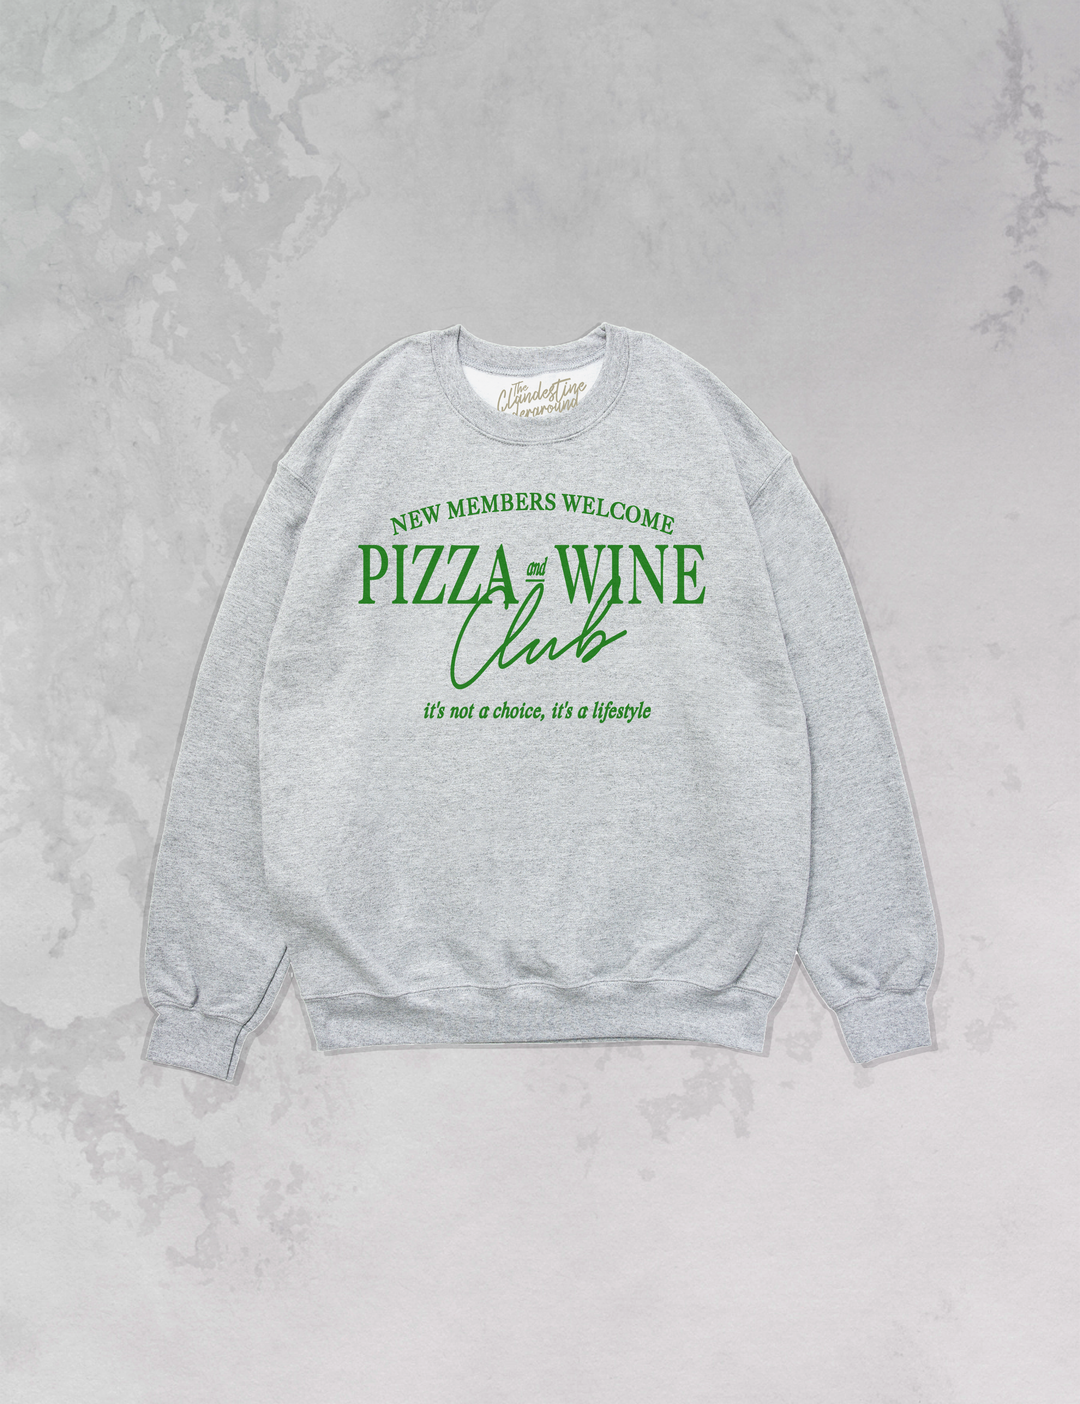 Underground Original Design: Pizza + Wine Club Oversized 90s Sweatshirt